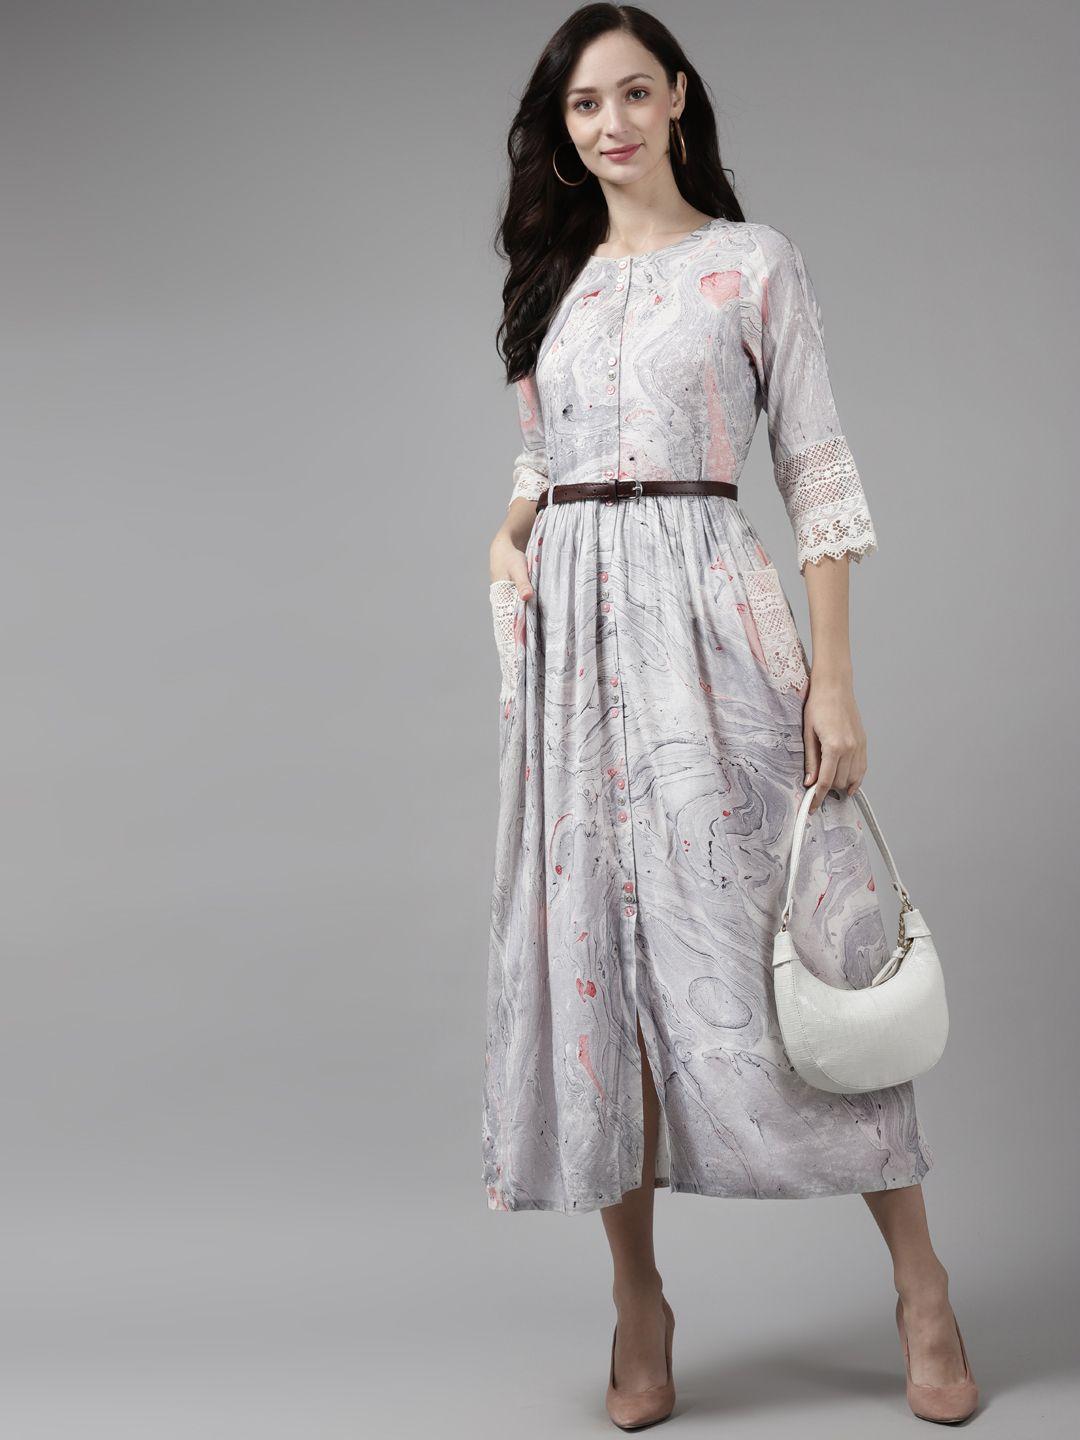 amirah s off white & grey printed midi dress with schifli pockets